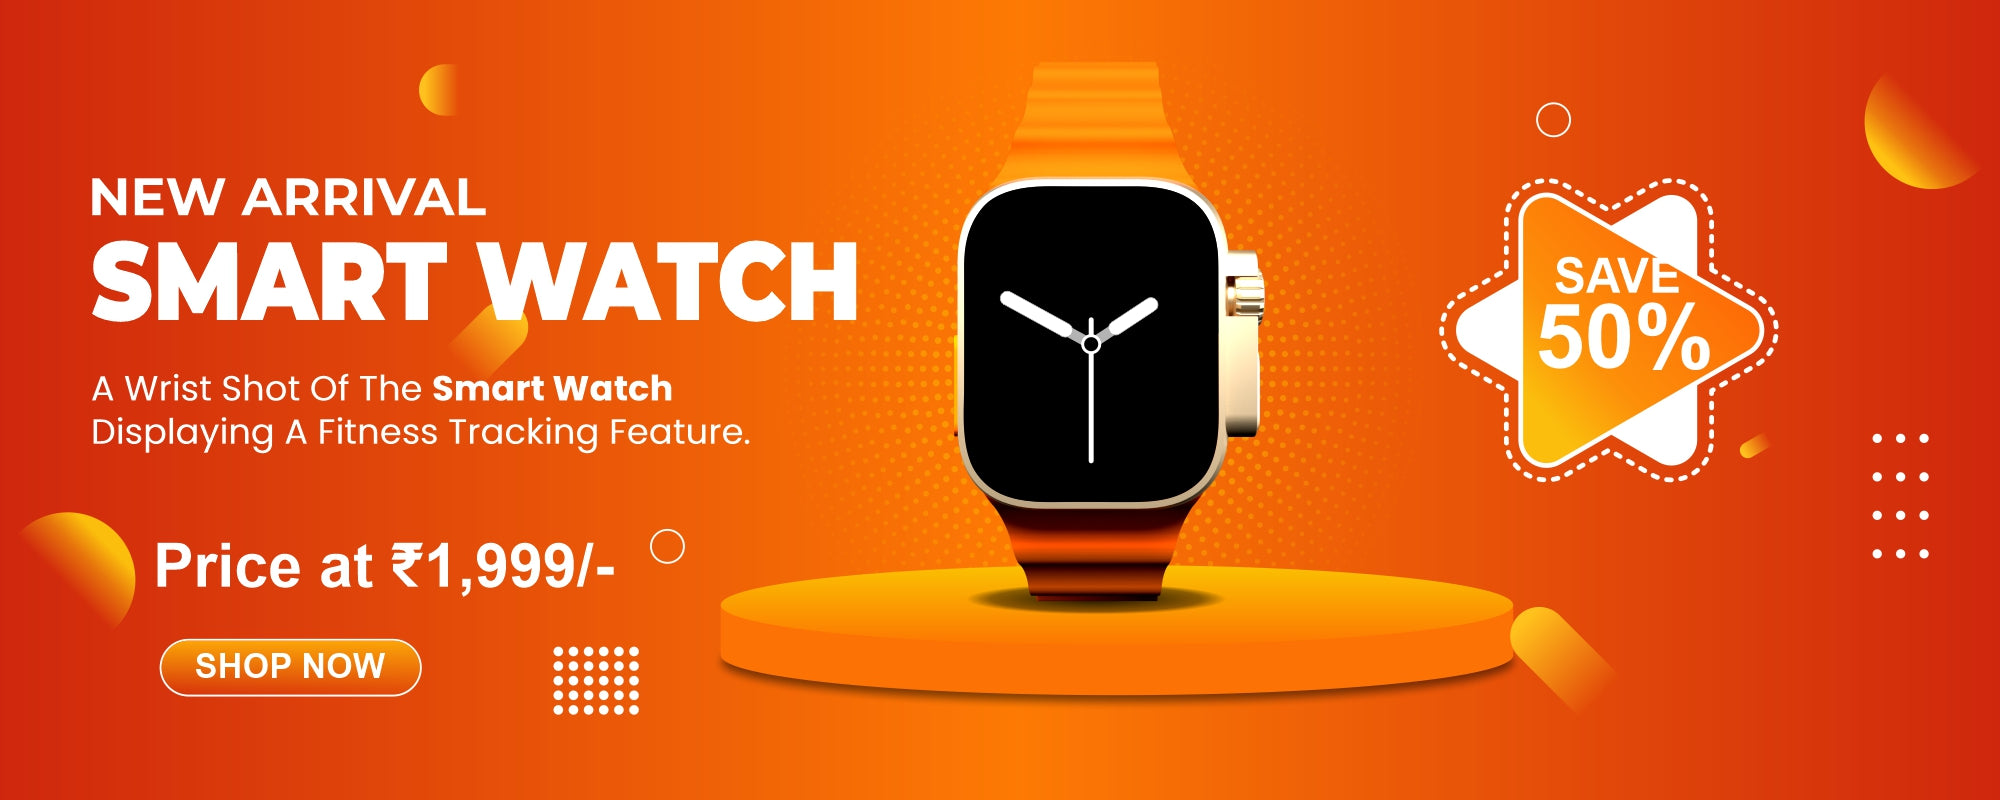 Foxsky Smart Watch Launching New Arrival